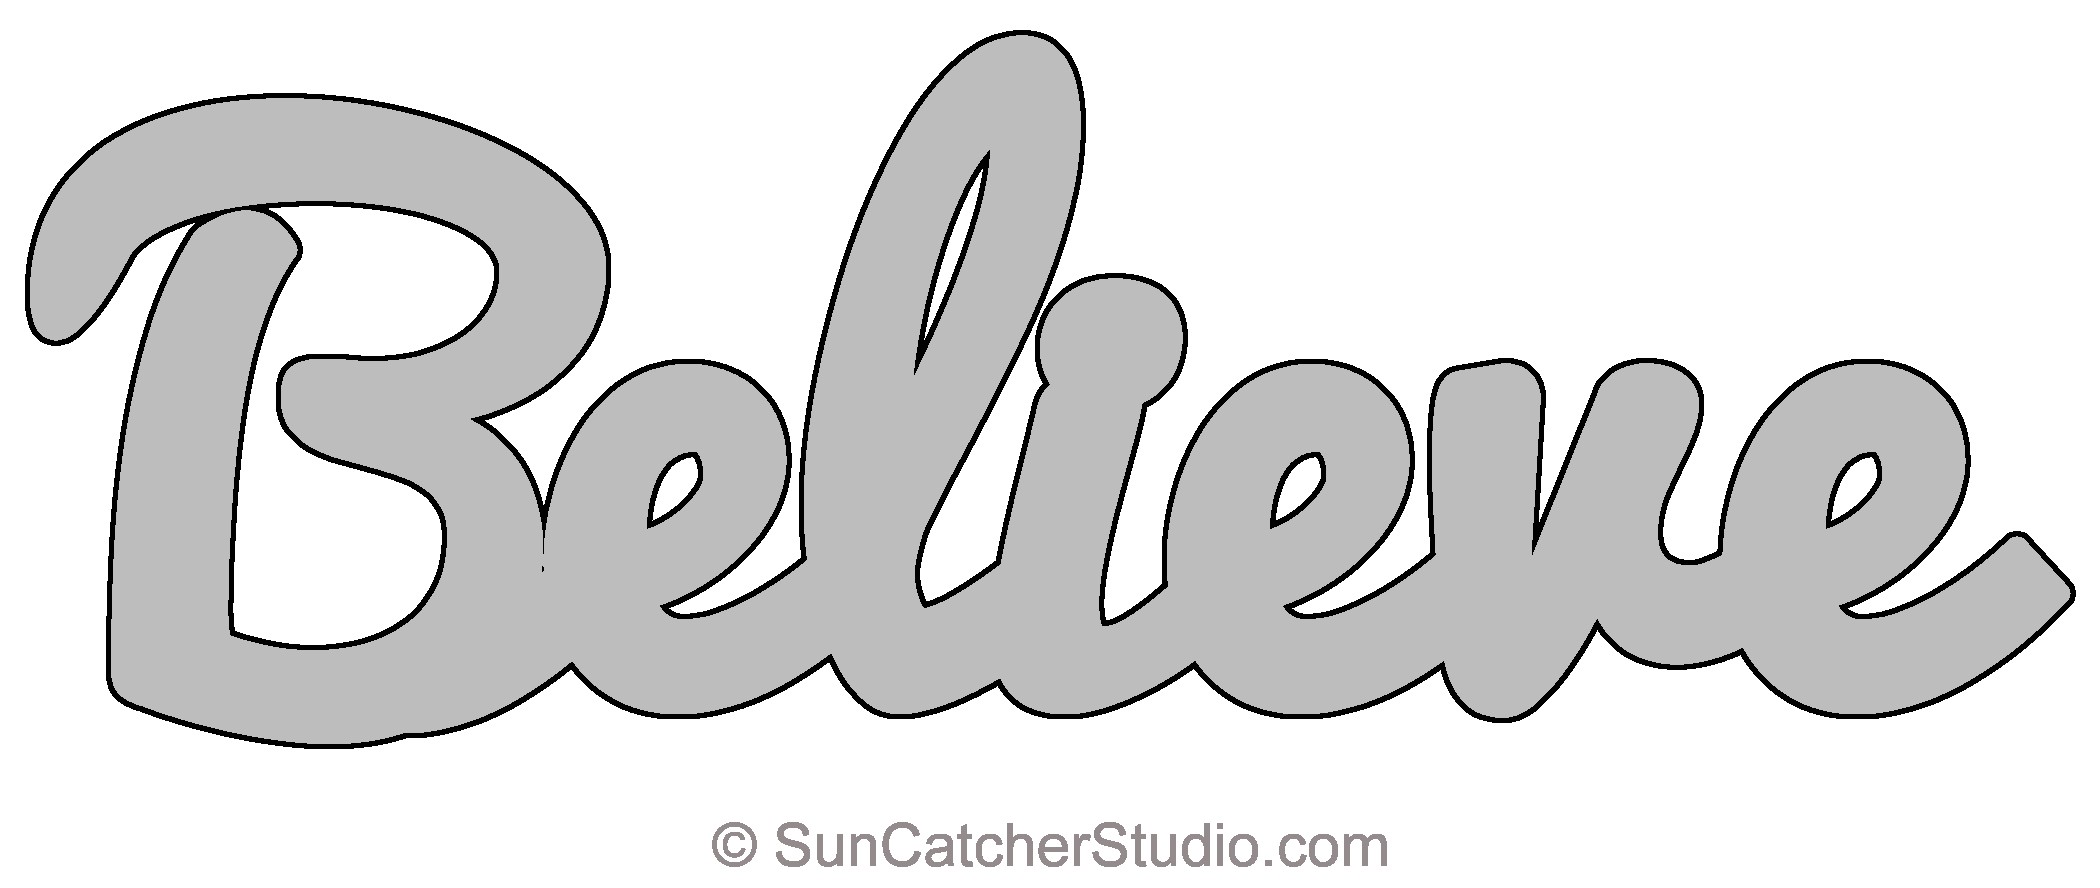 Believe Pattern FREE Template Stencil Printable Word Art Design